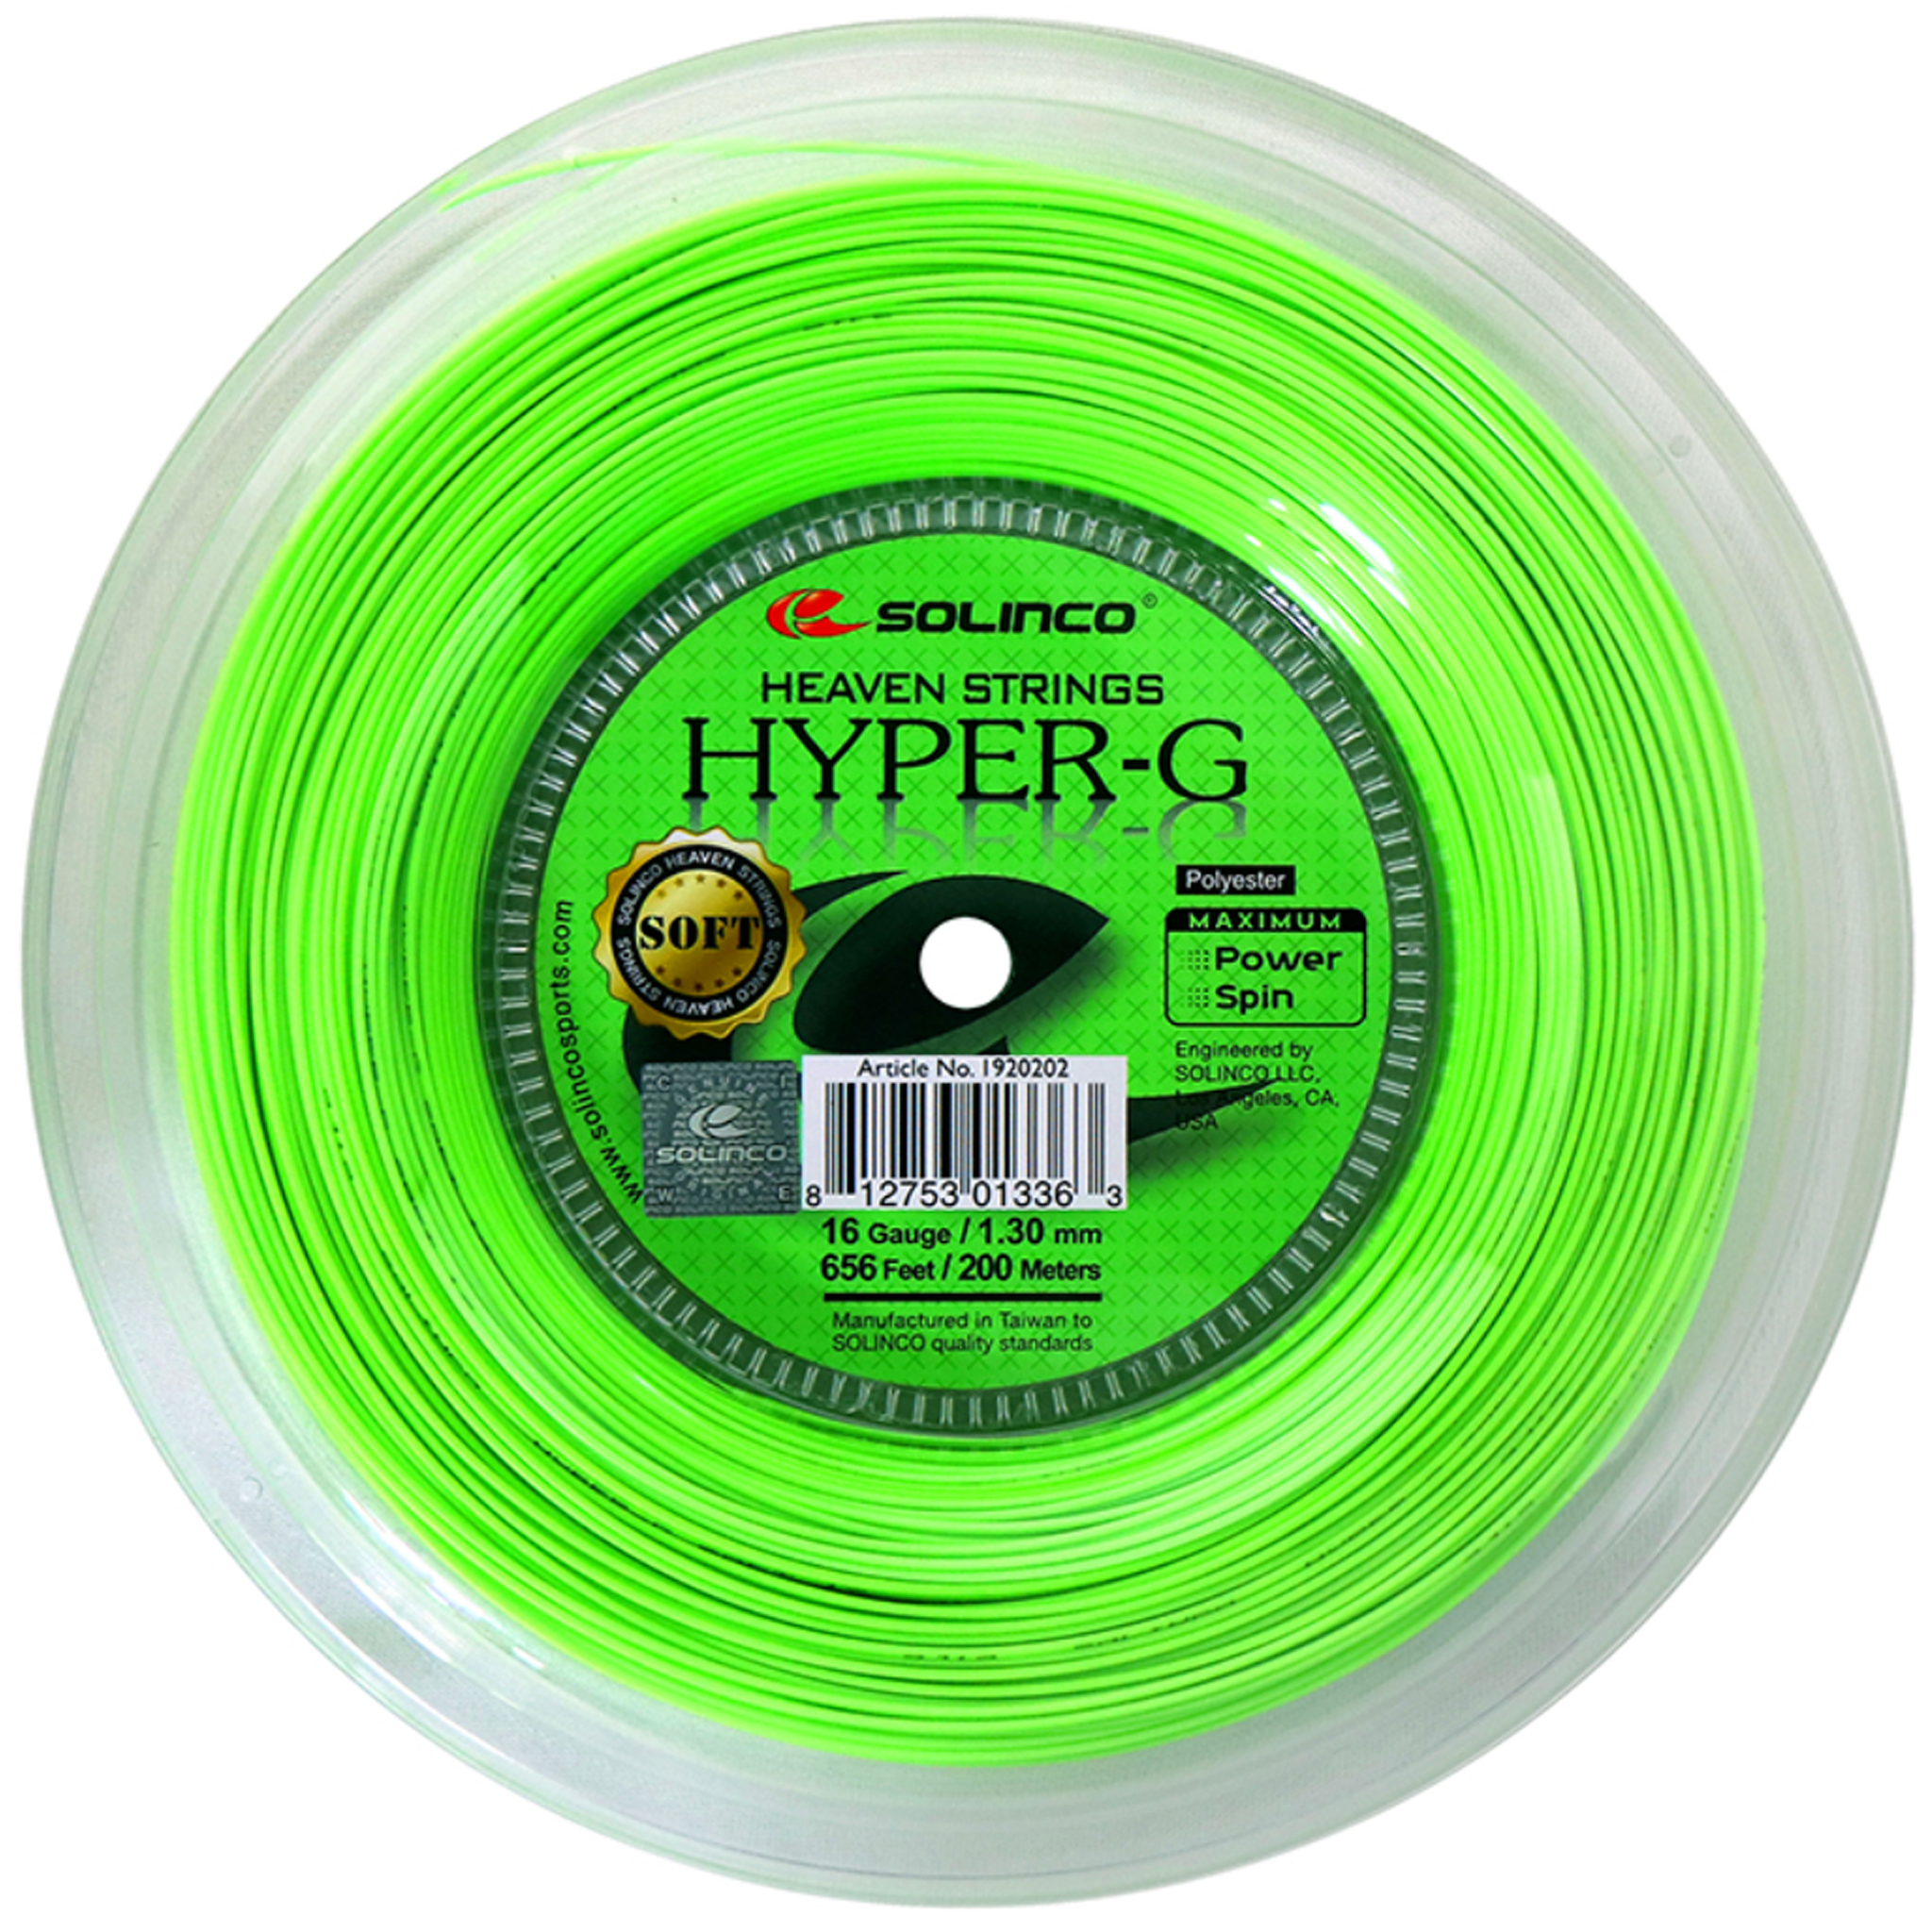 Solinco Hyper-G Soft 200m reel